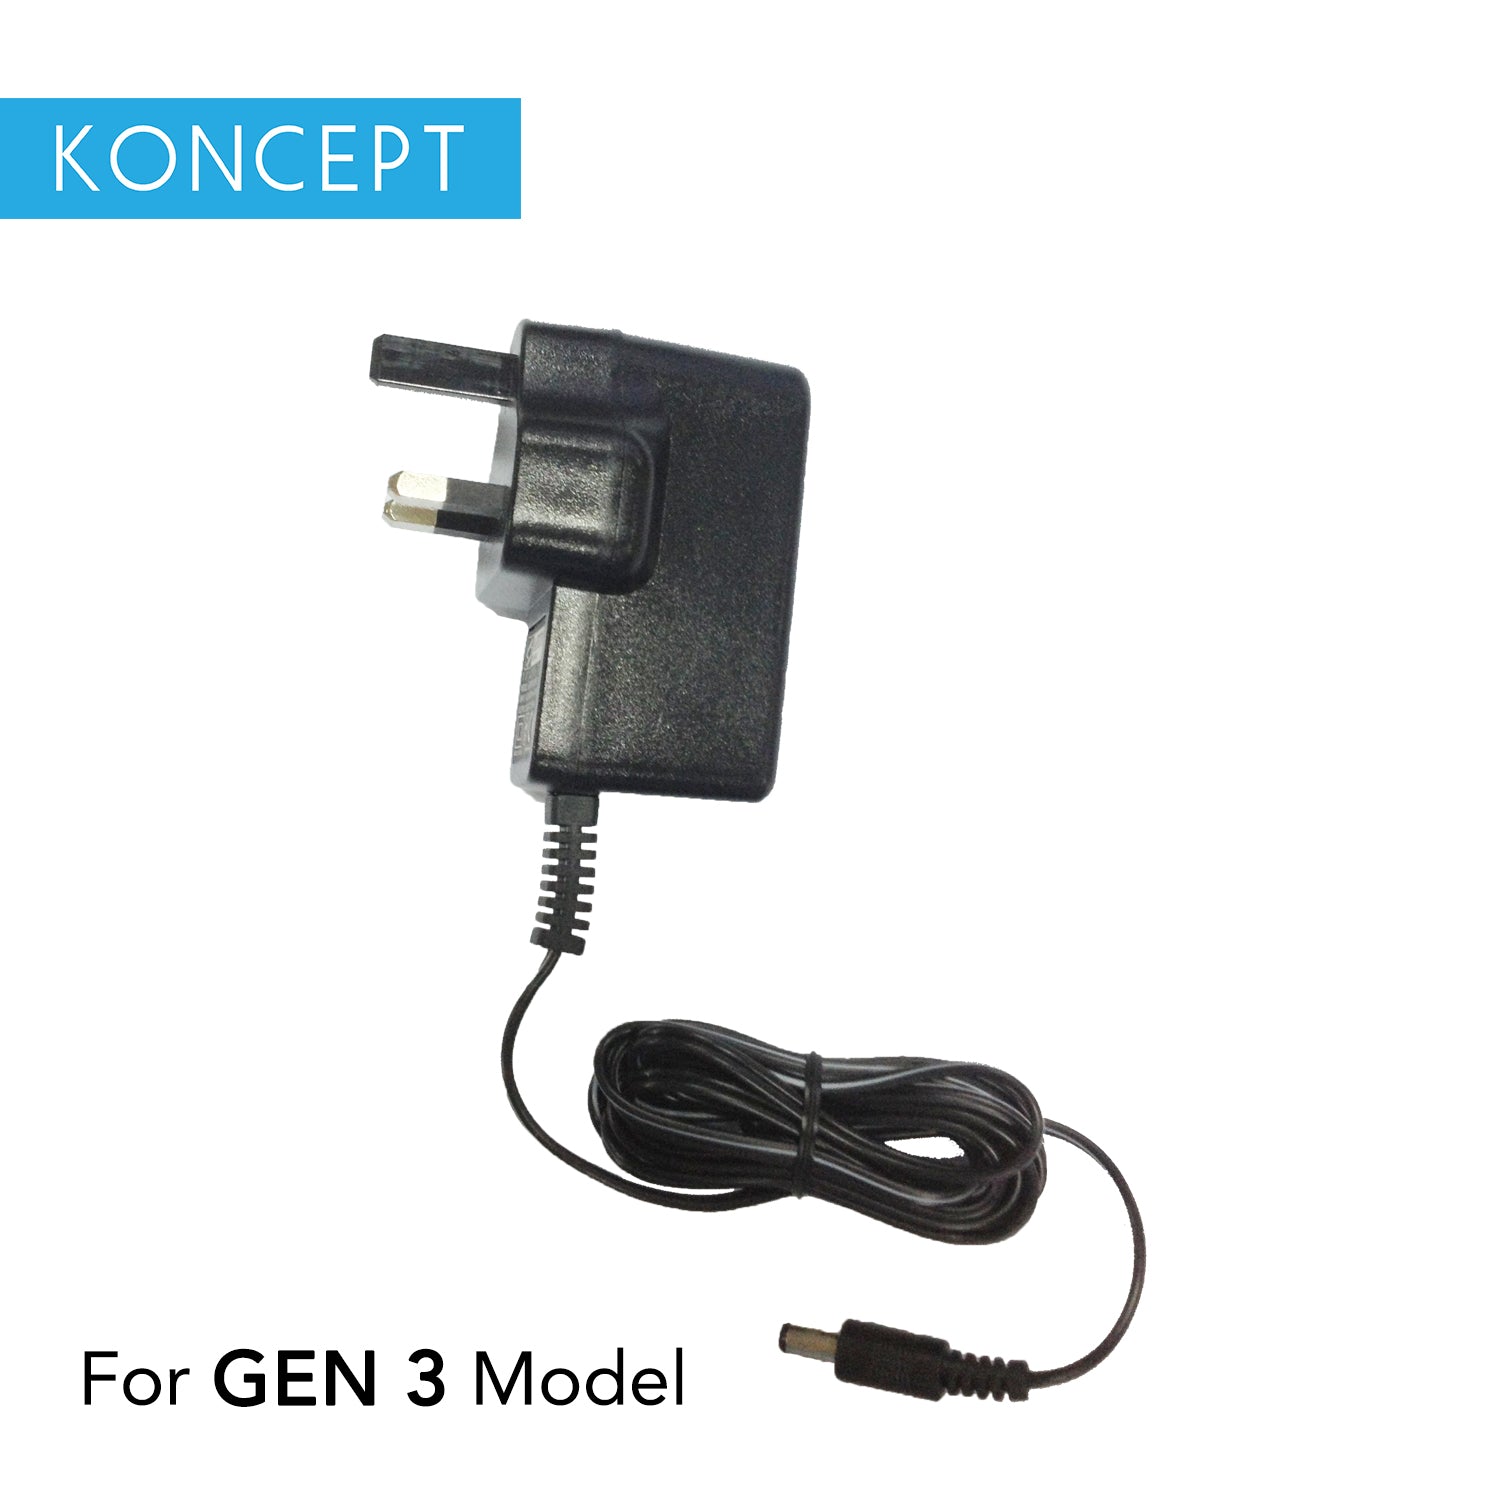 Koncept Replacement AC Power Adaptor for Gen 3/2/1 Model